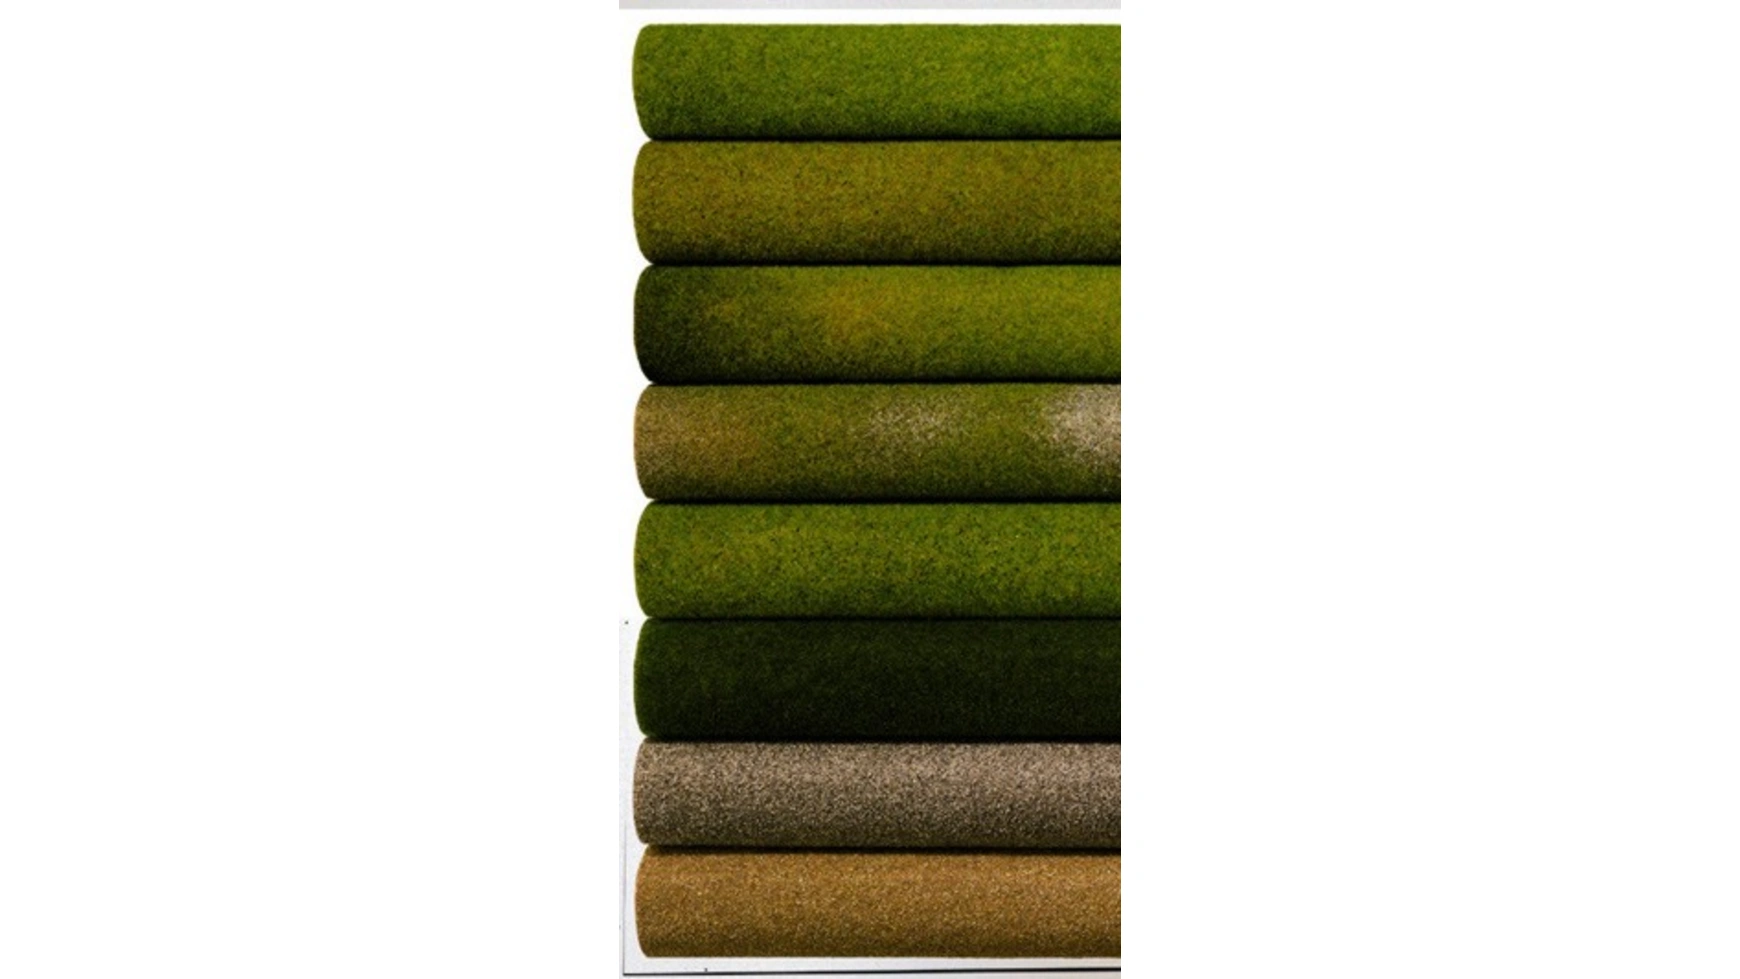 цена Grass mat коврик для травы, темно-зеленый 120 x 60см Noch